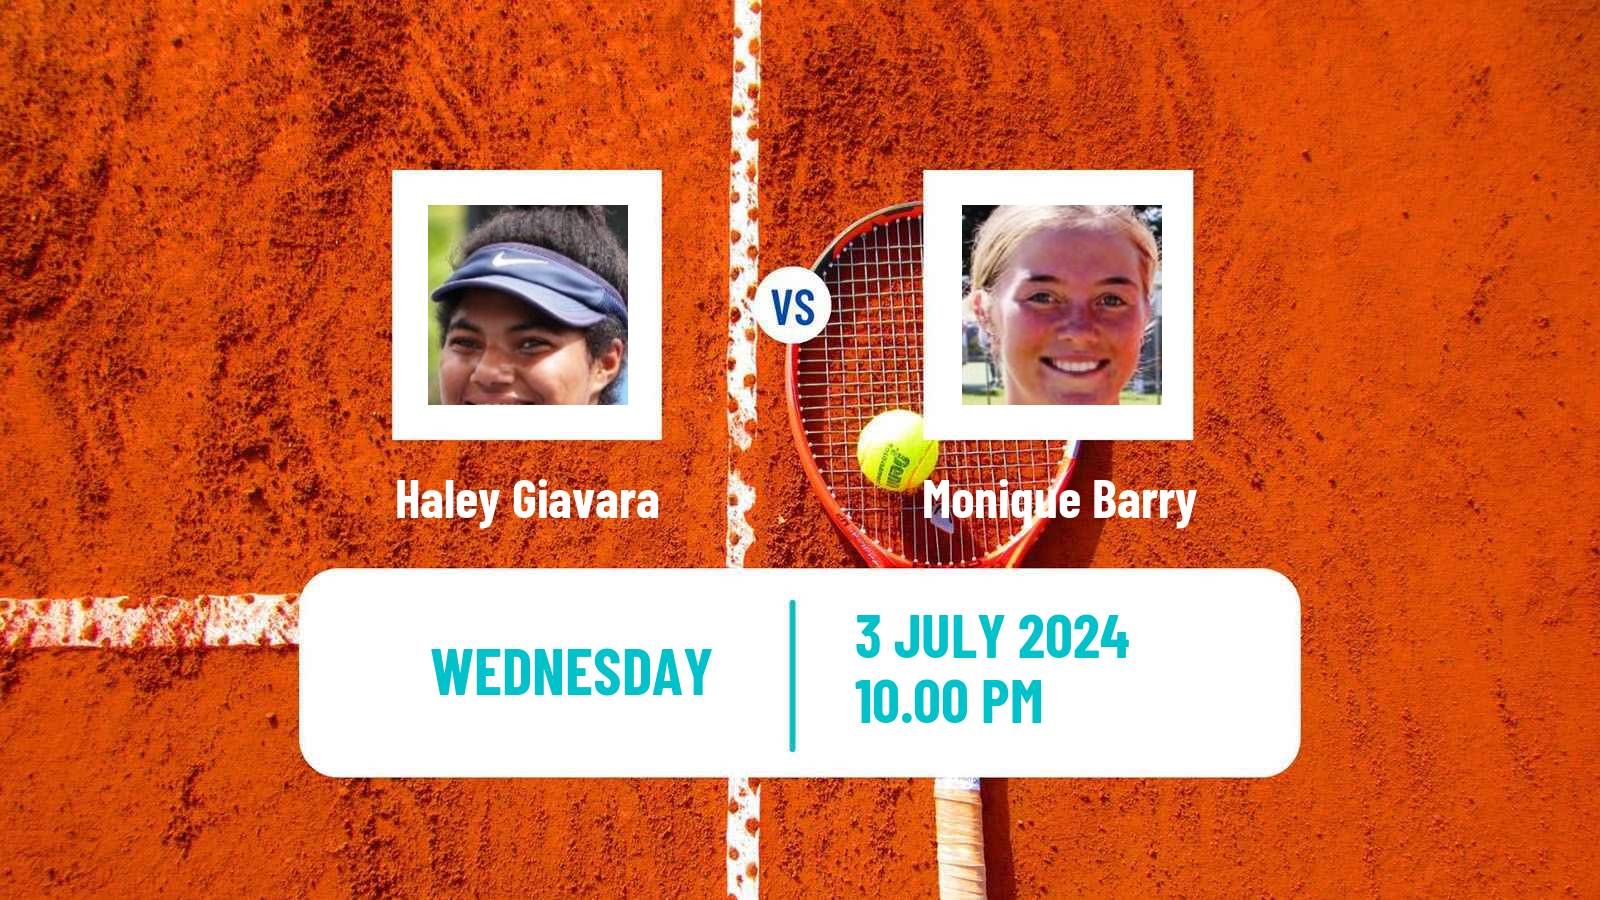 Tennis ITF W35 Nakhon Si Thammarat 2 Women Haley Giavara - Monique Barry